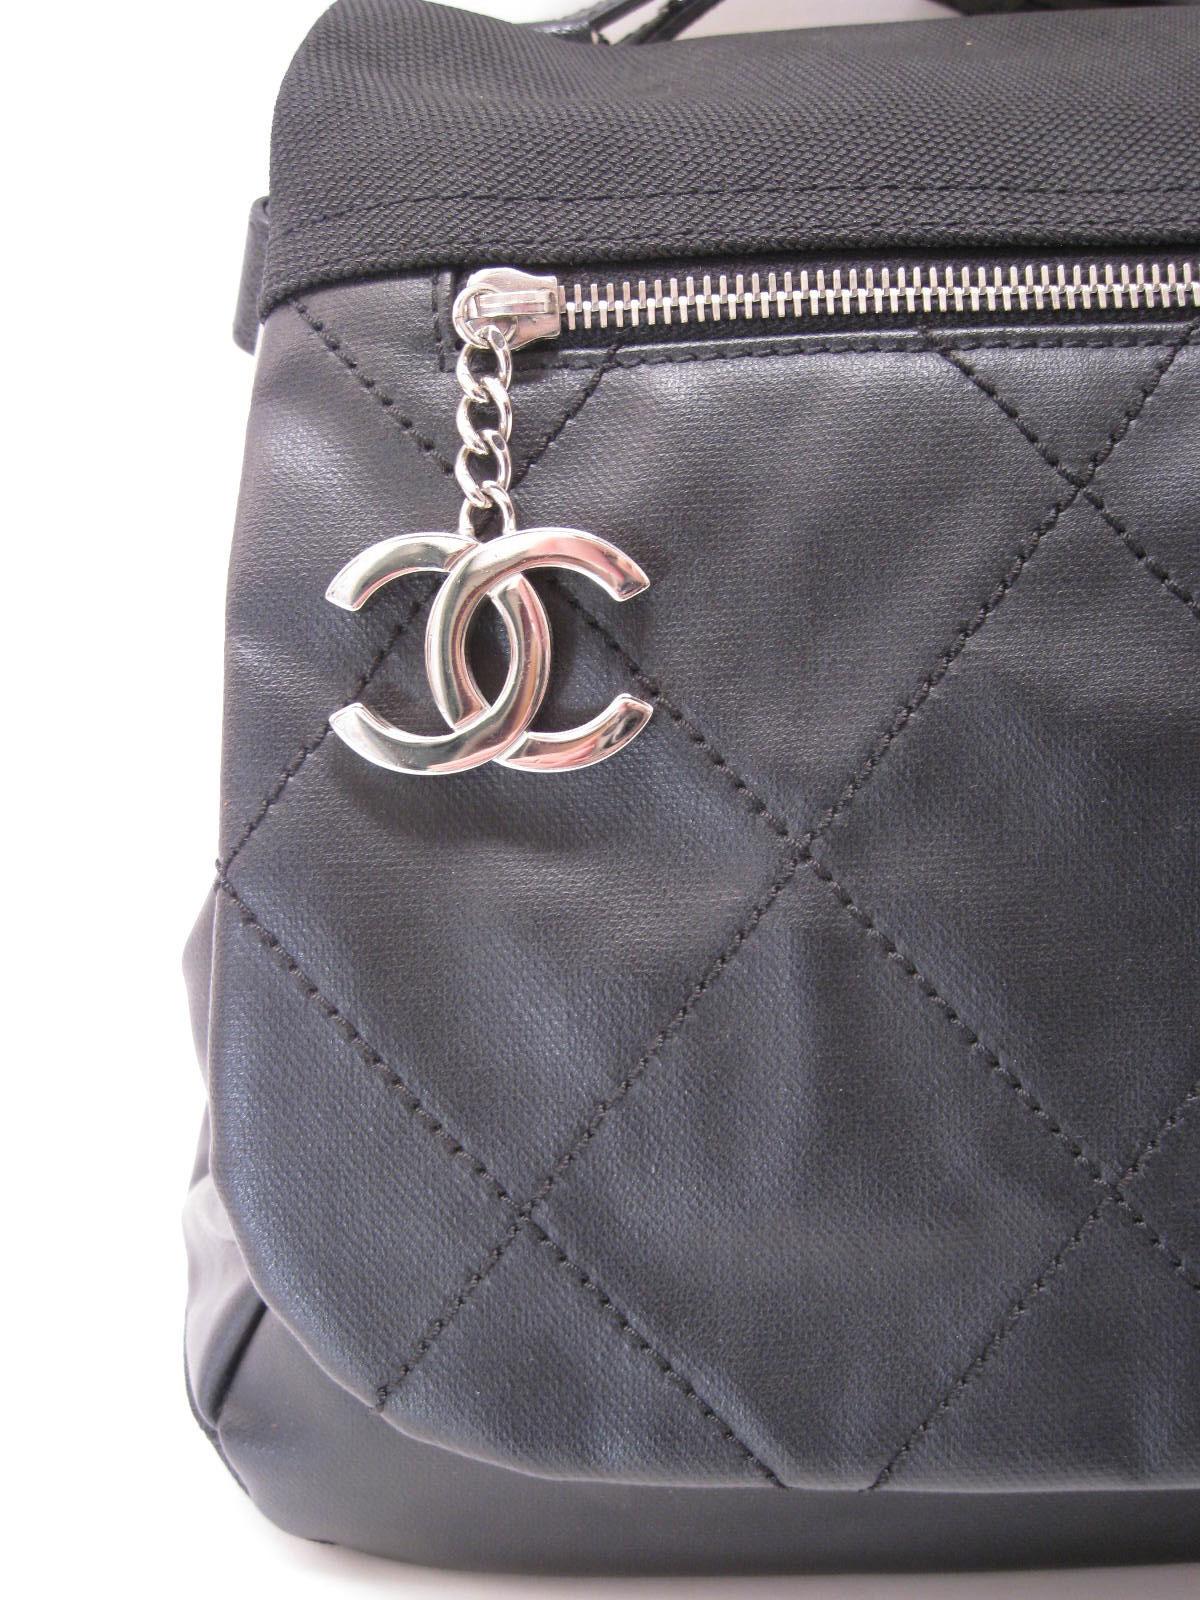 Chanel Large Structured Black Hobo Flap Bag Purse 5